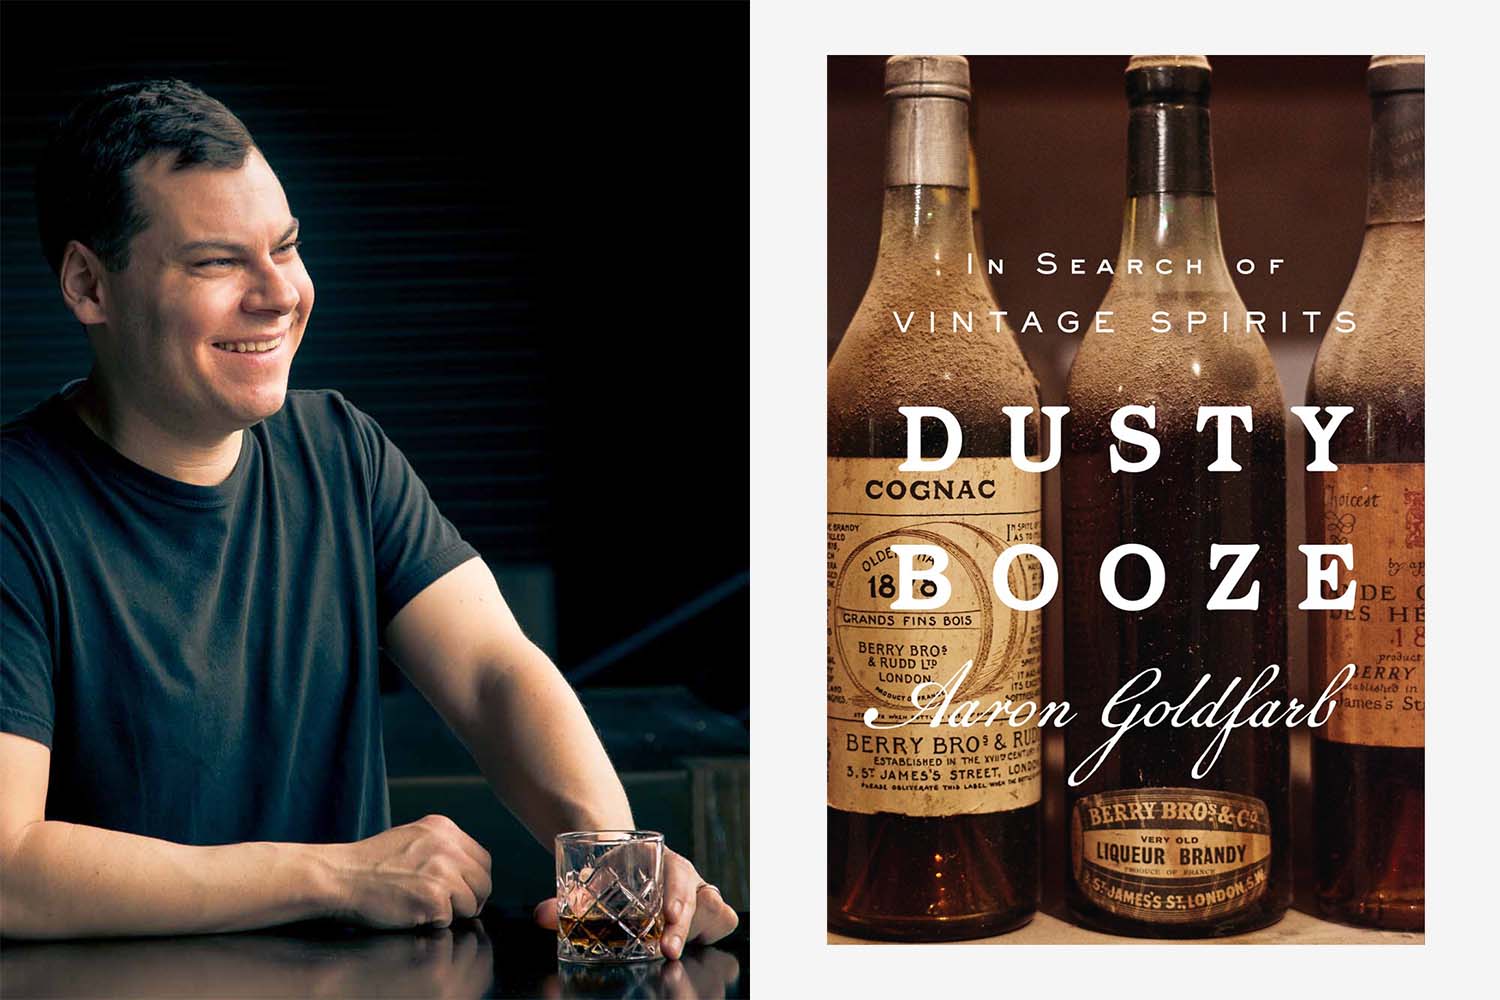 "Dusty Booze" author Aaron Goldfarb